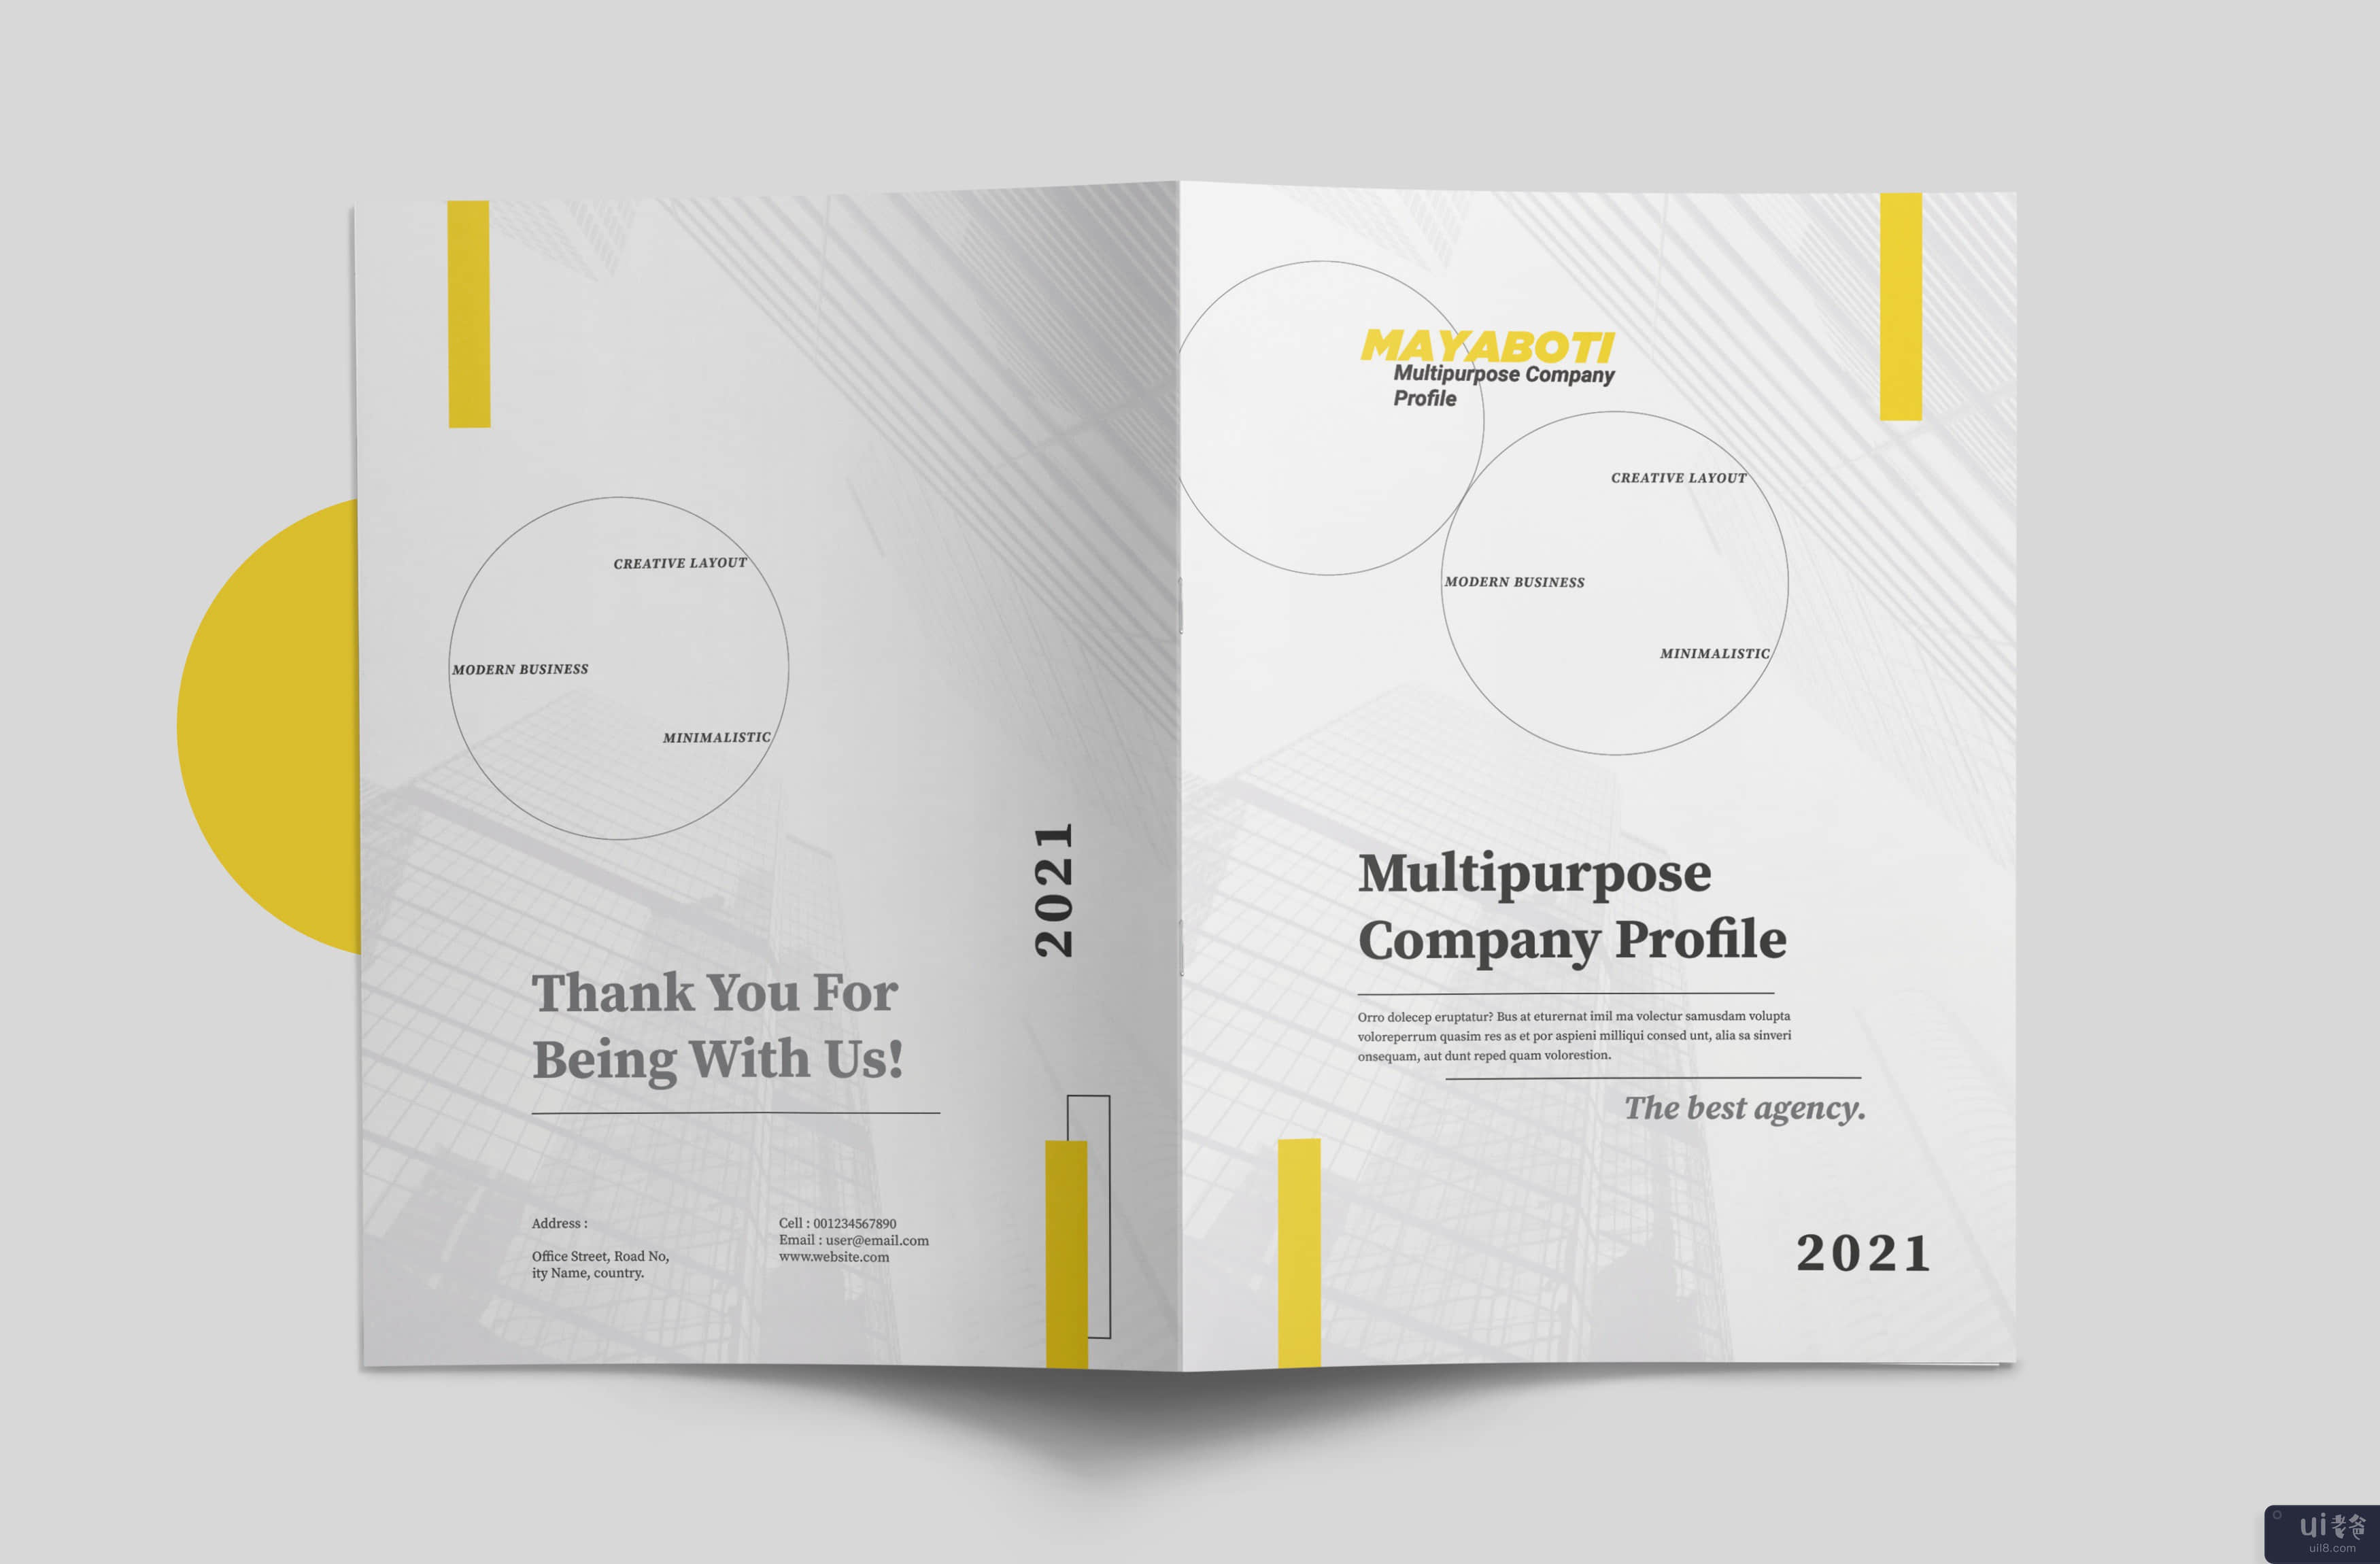 多功能公司简介手册(Multipurpose Company Profile Brochure)插图4